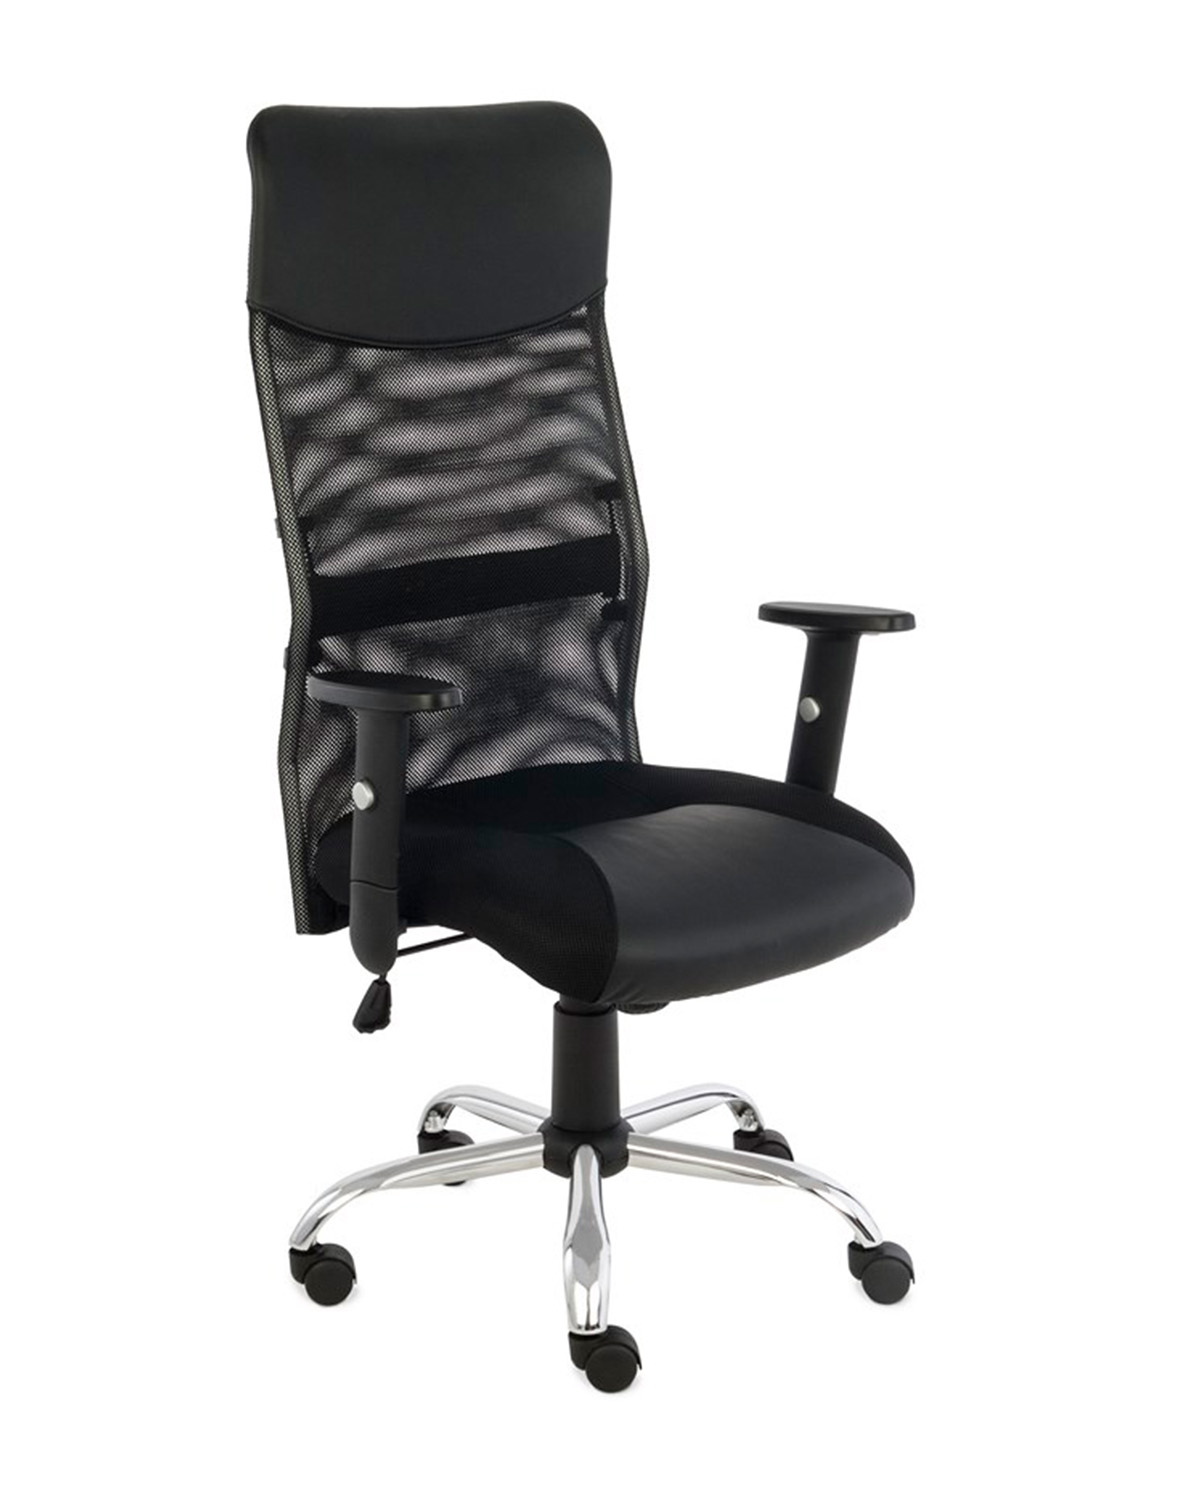 Grospol Plus R kancelářská židle černá